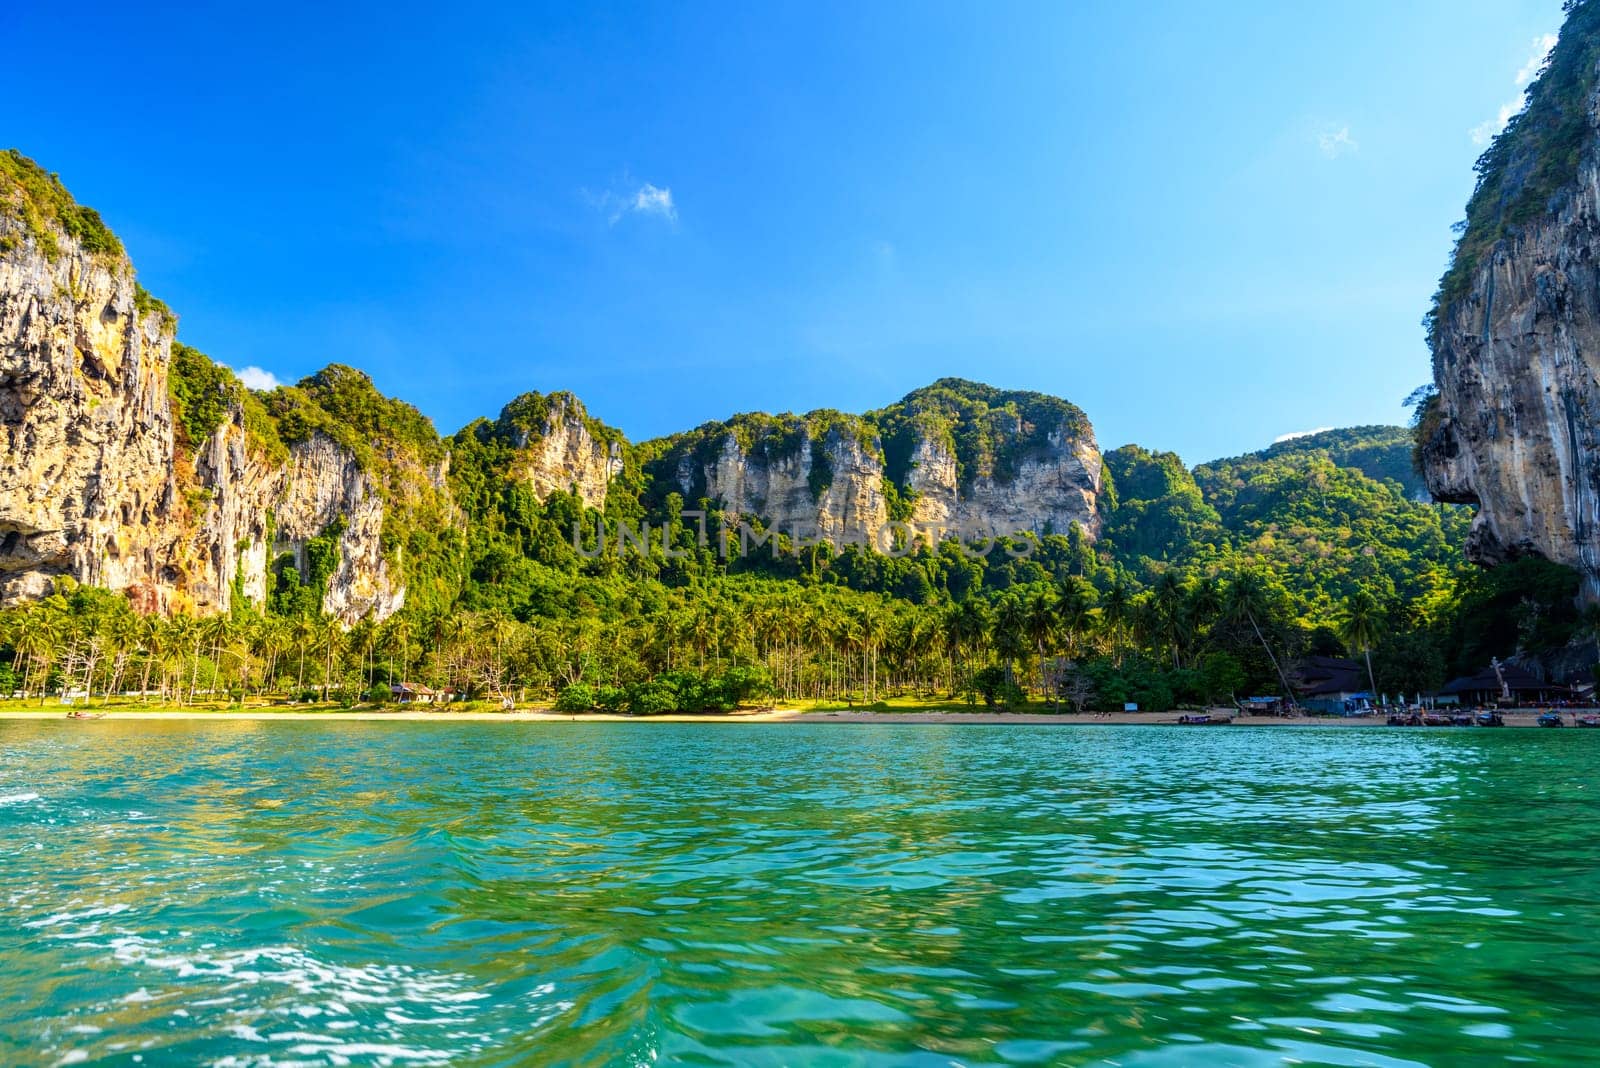 Long tail boat on tropical beach with palms, Tonsai Bay, Railay Beach, Ao Nang, Krabi, Thailand by Eagle2308